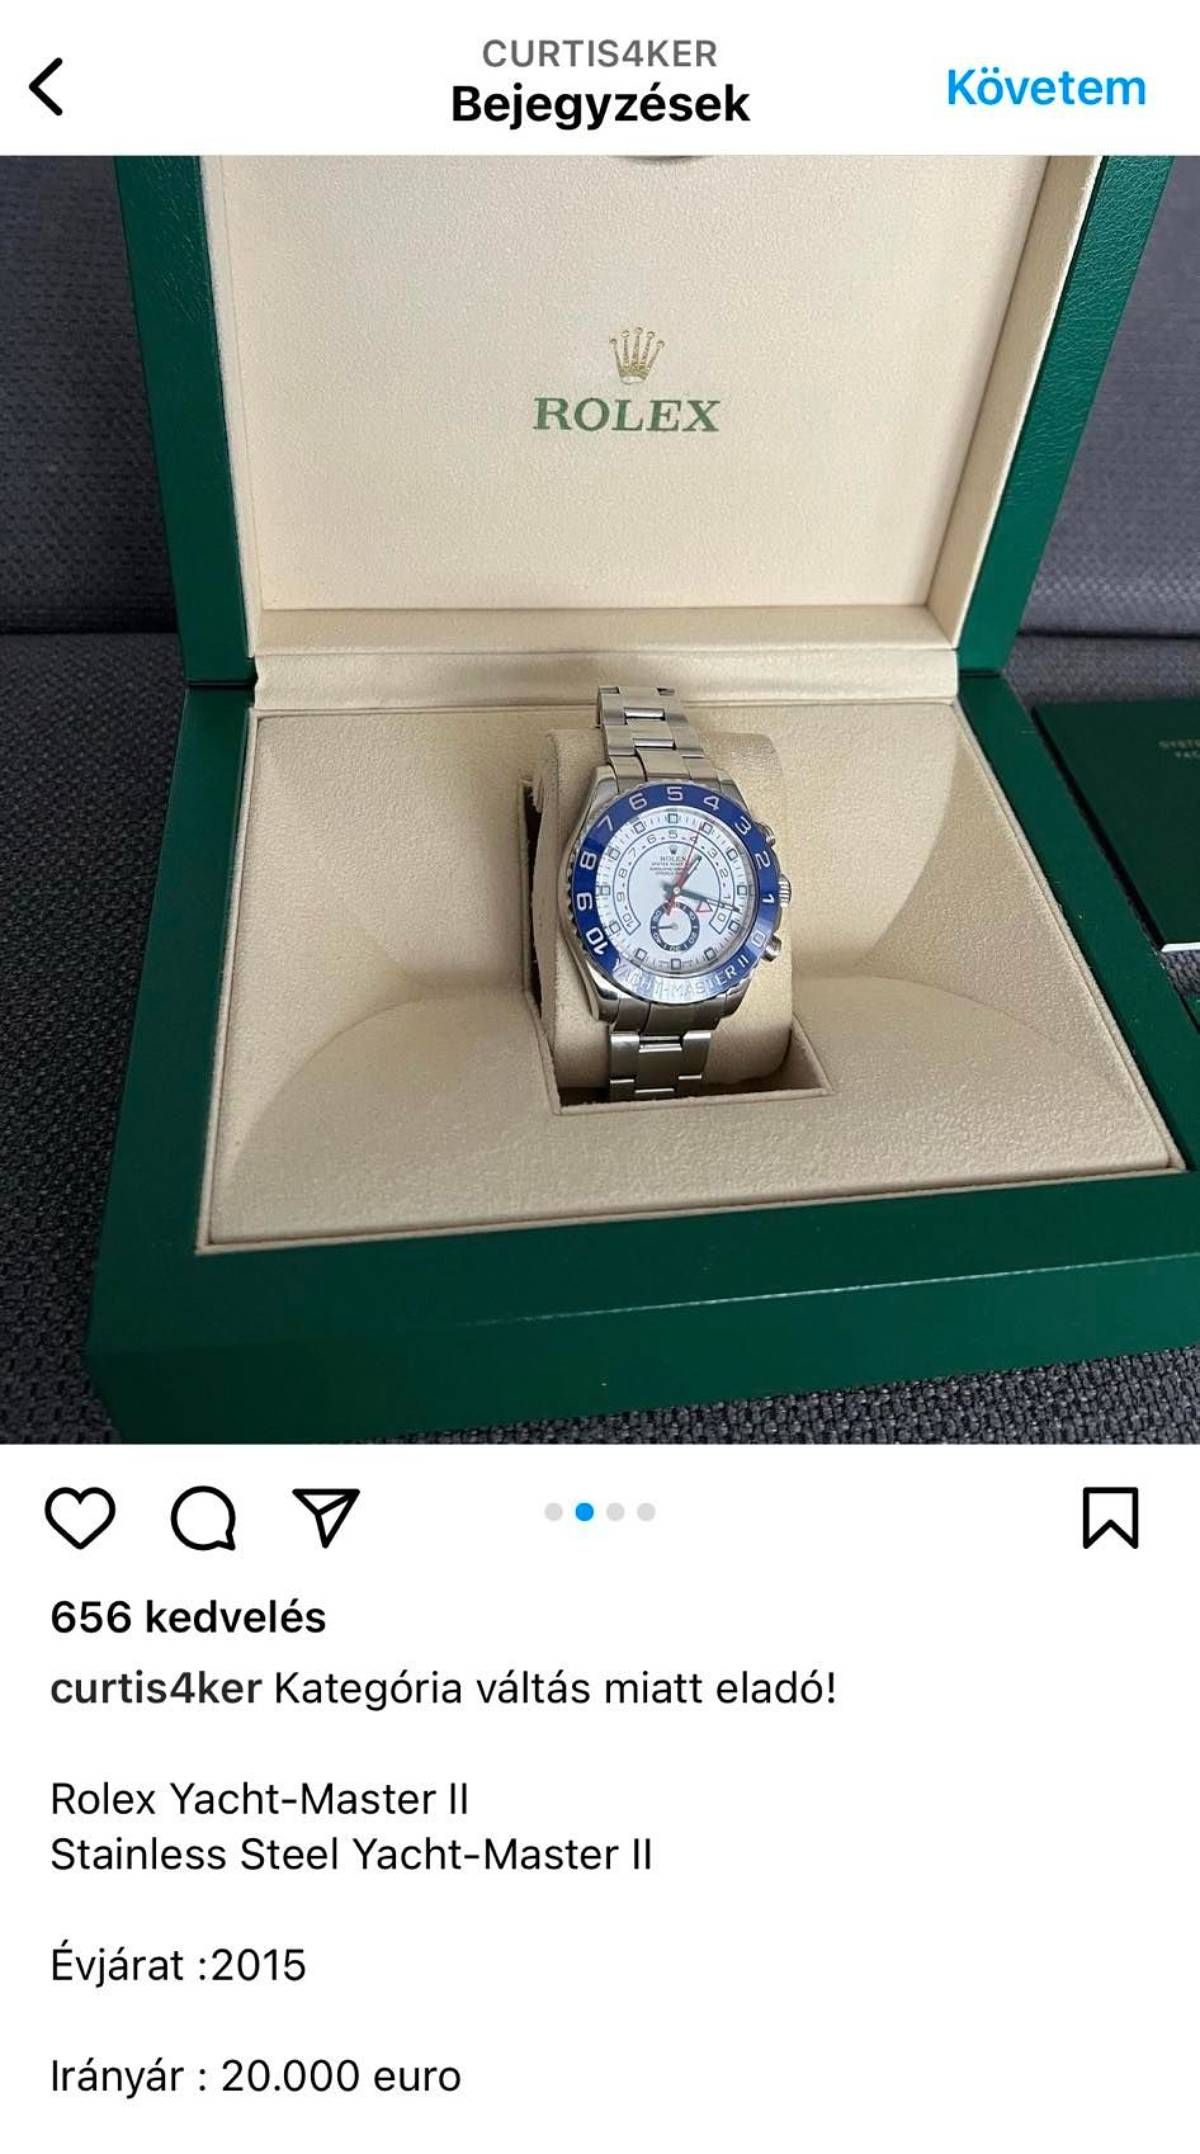 Széki Attila Curtis eladó luxusóra, Instagram